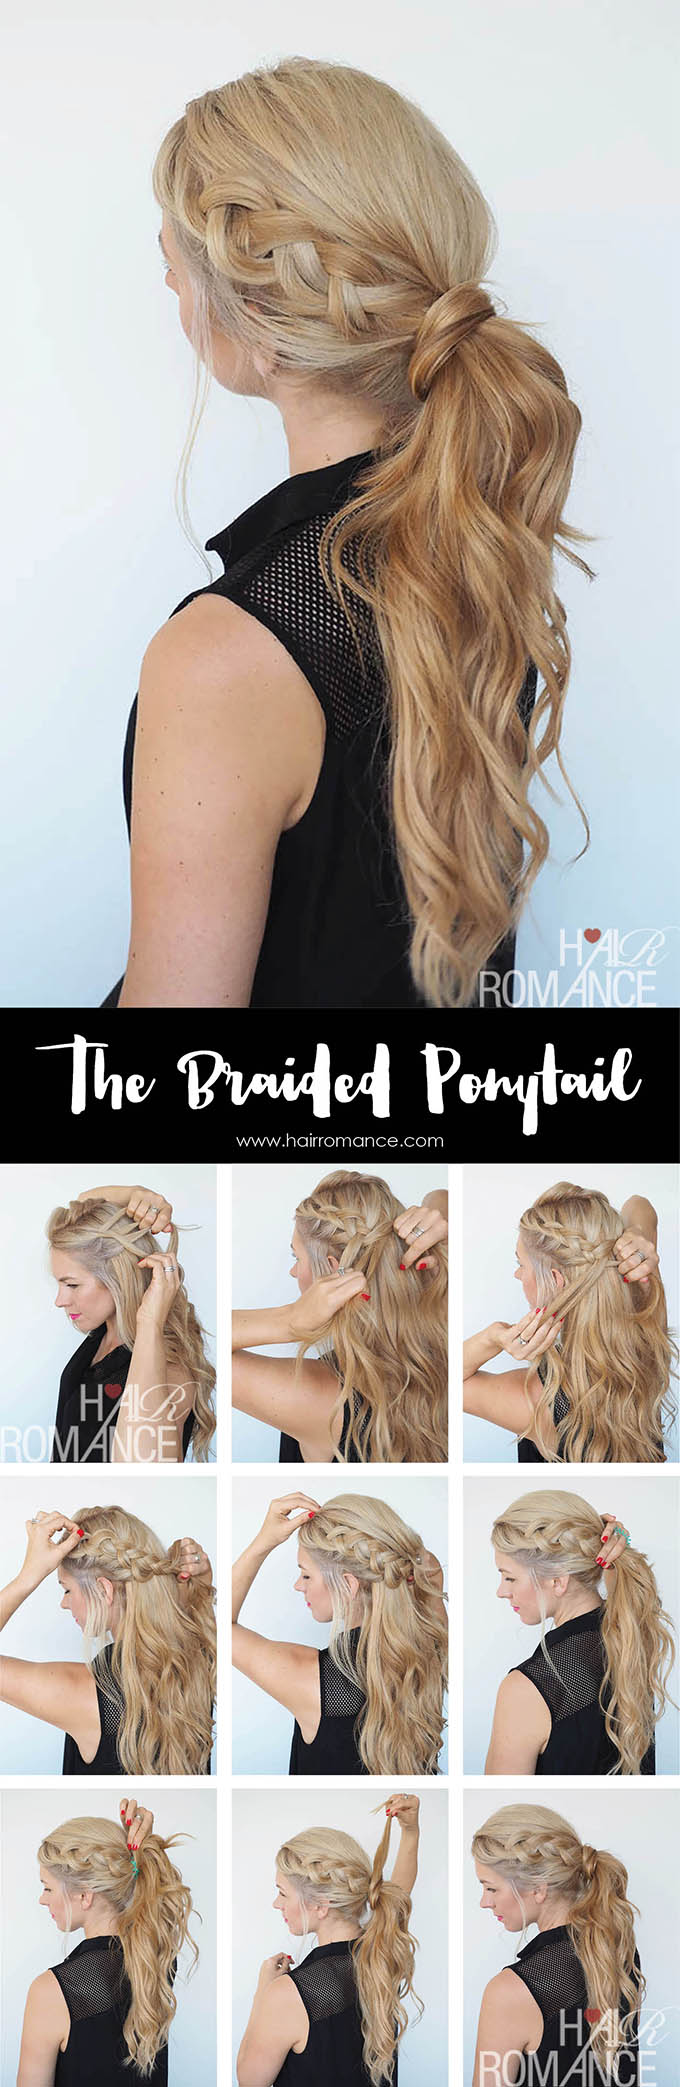 braided-ponytail-hairstyle-tutorial